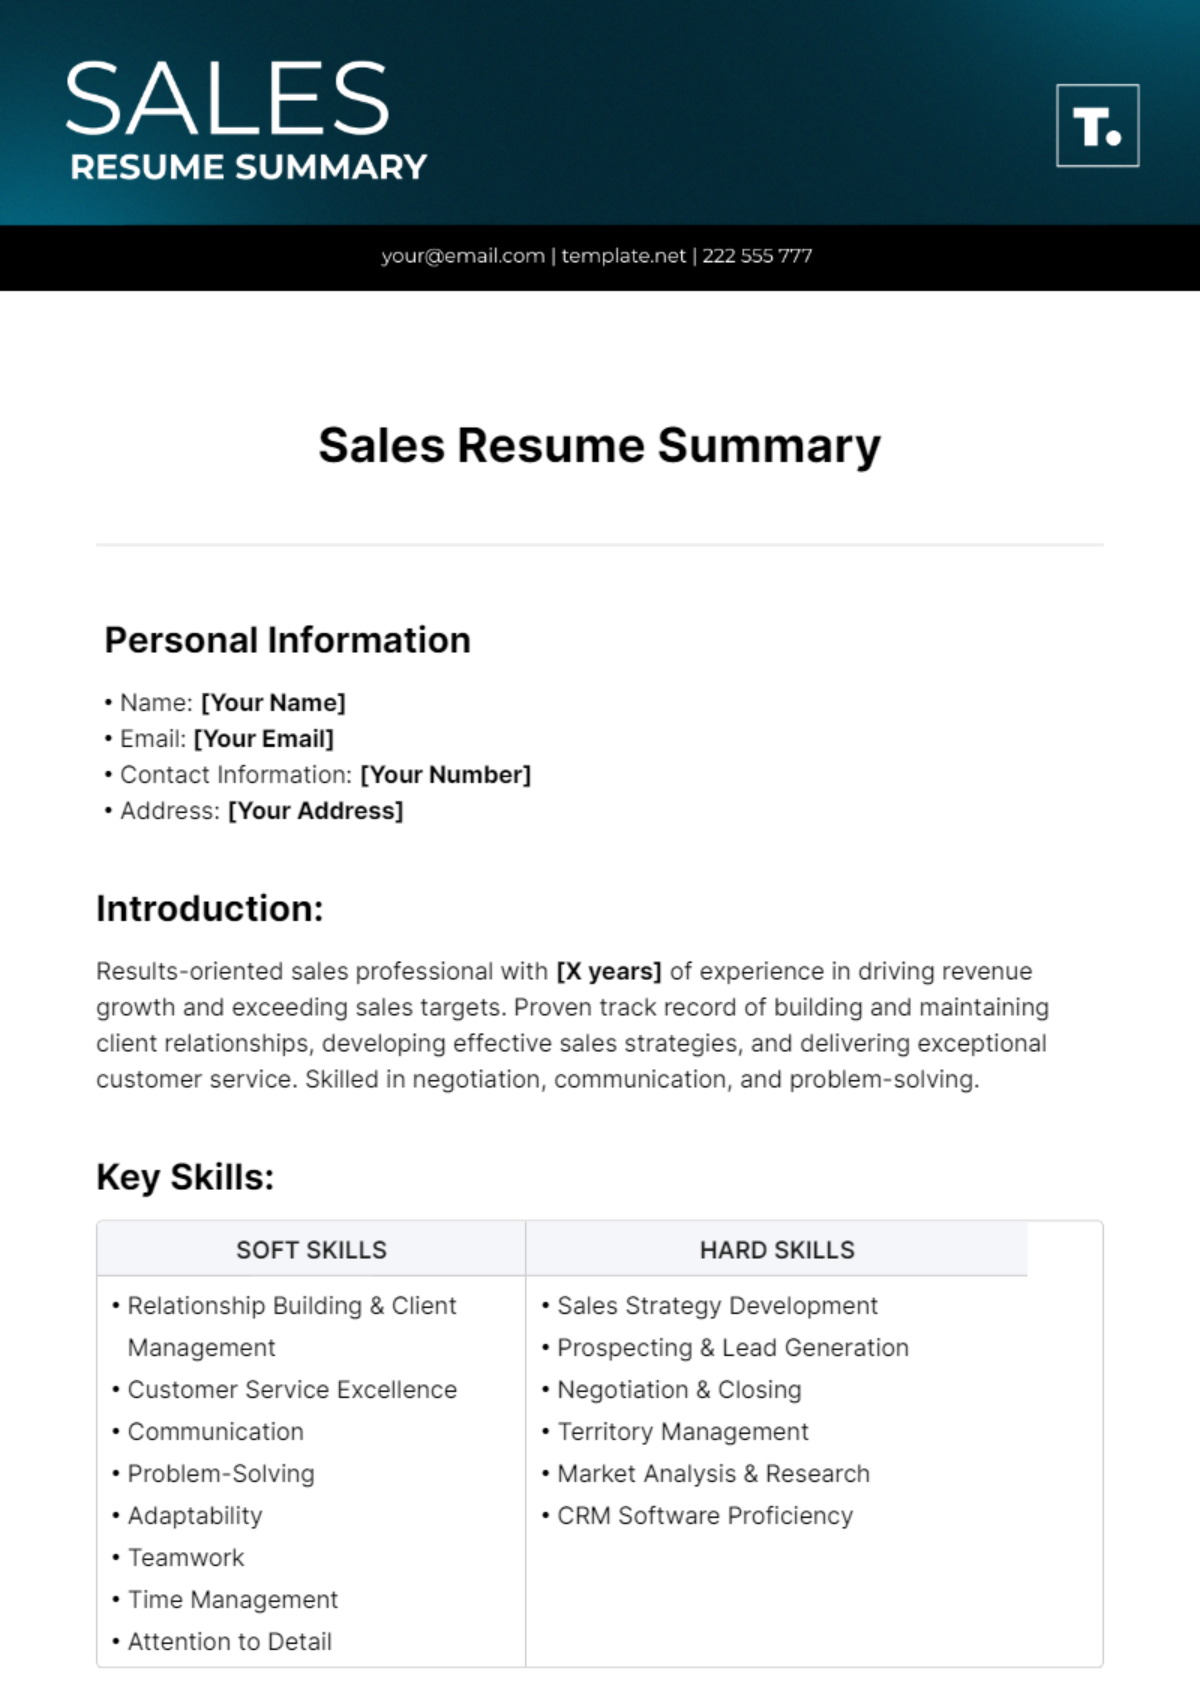 Sales Resume Summary Template